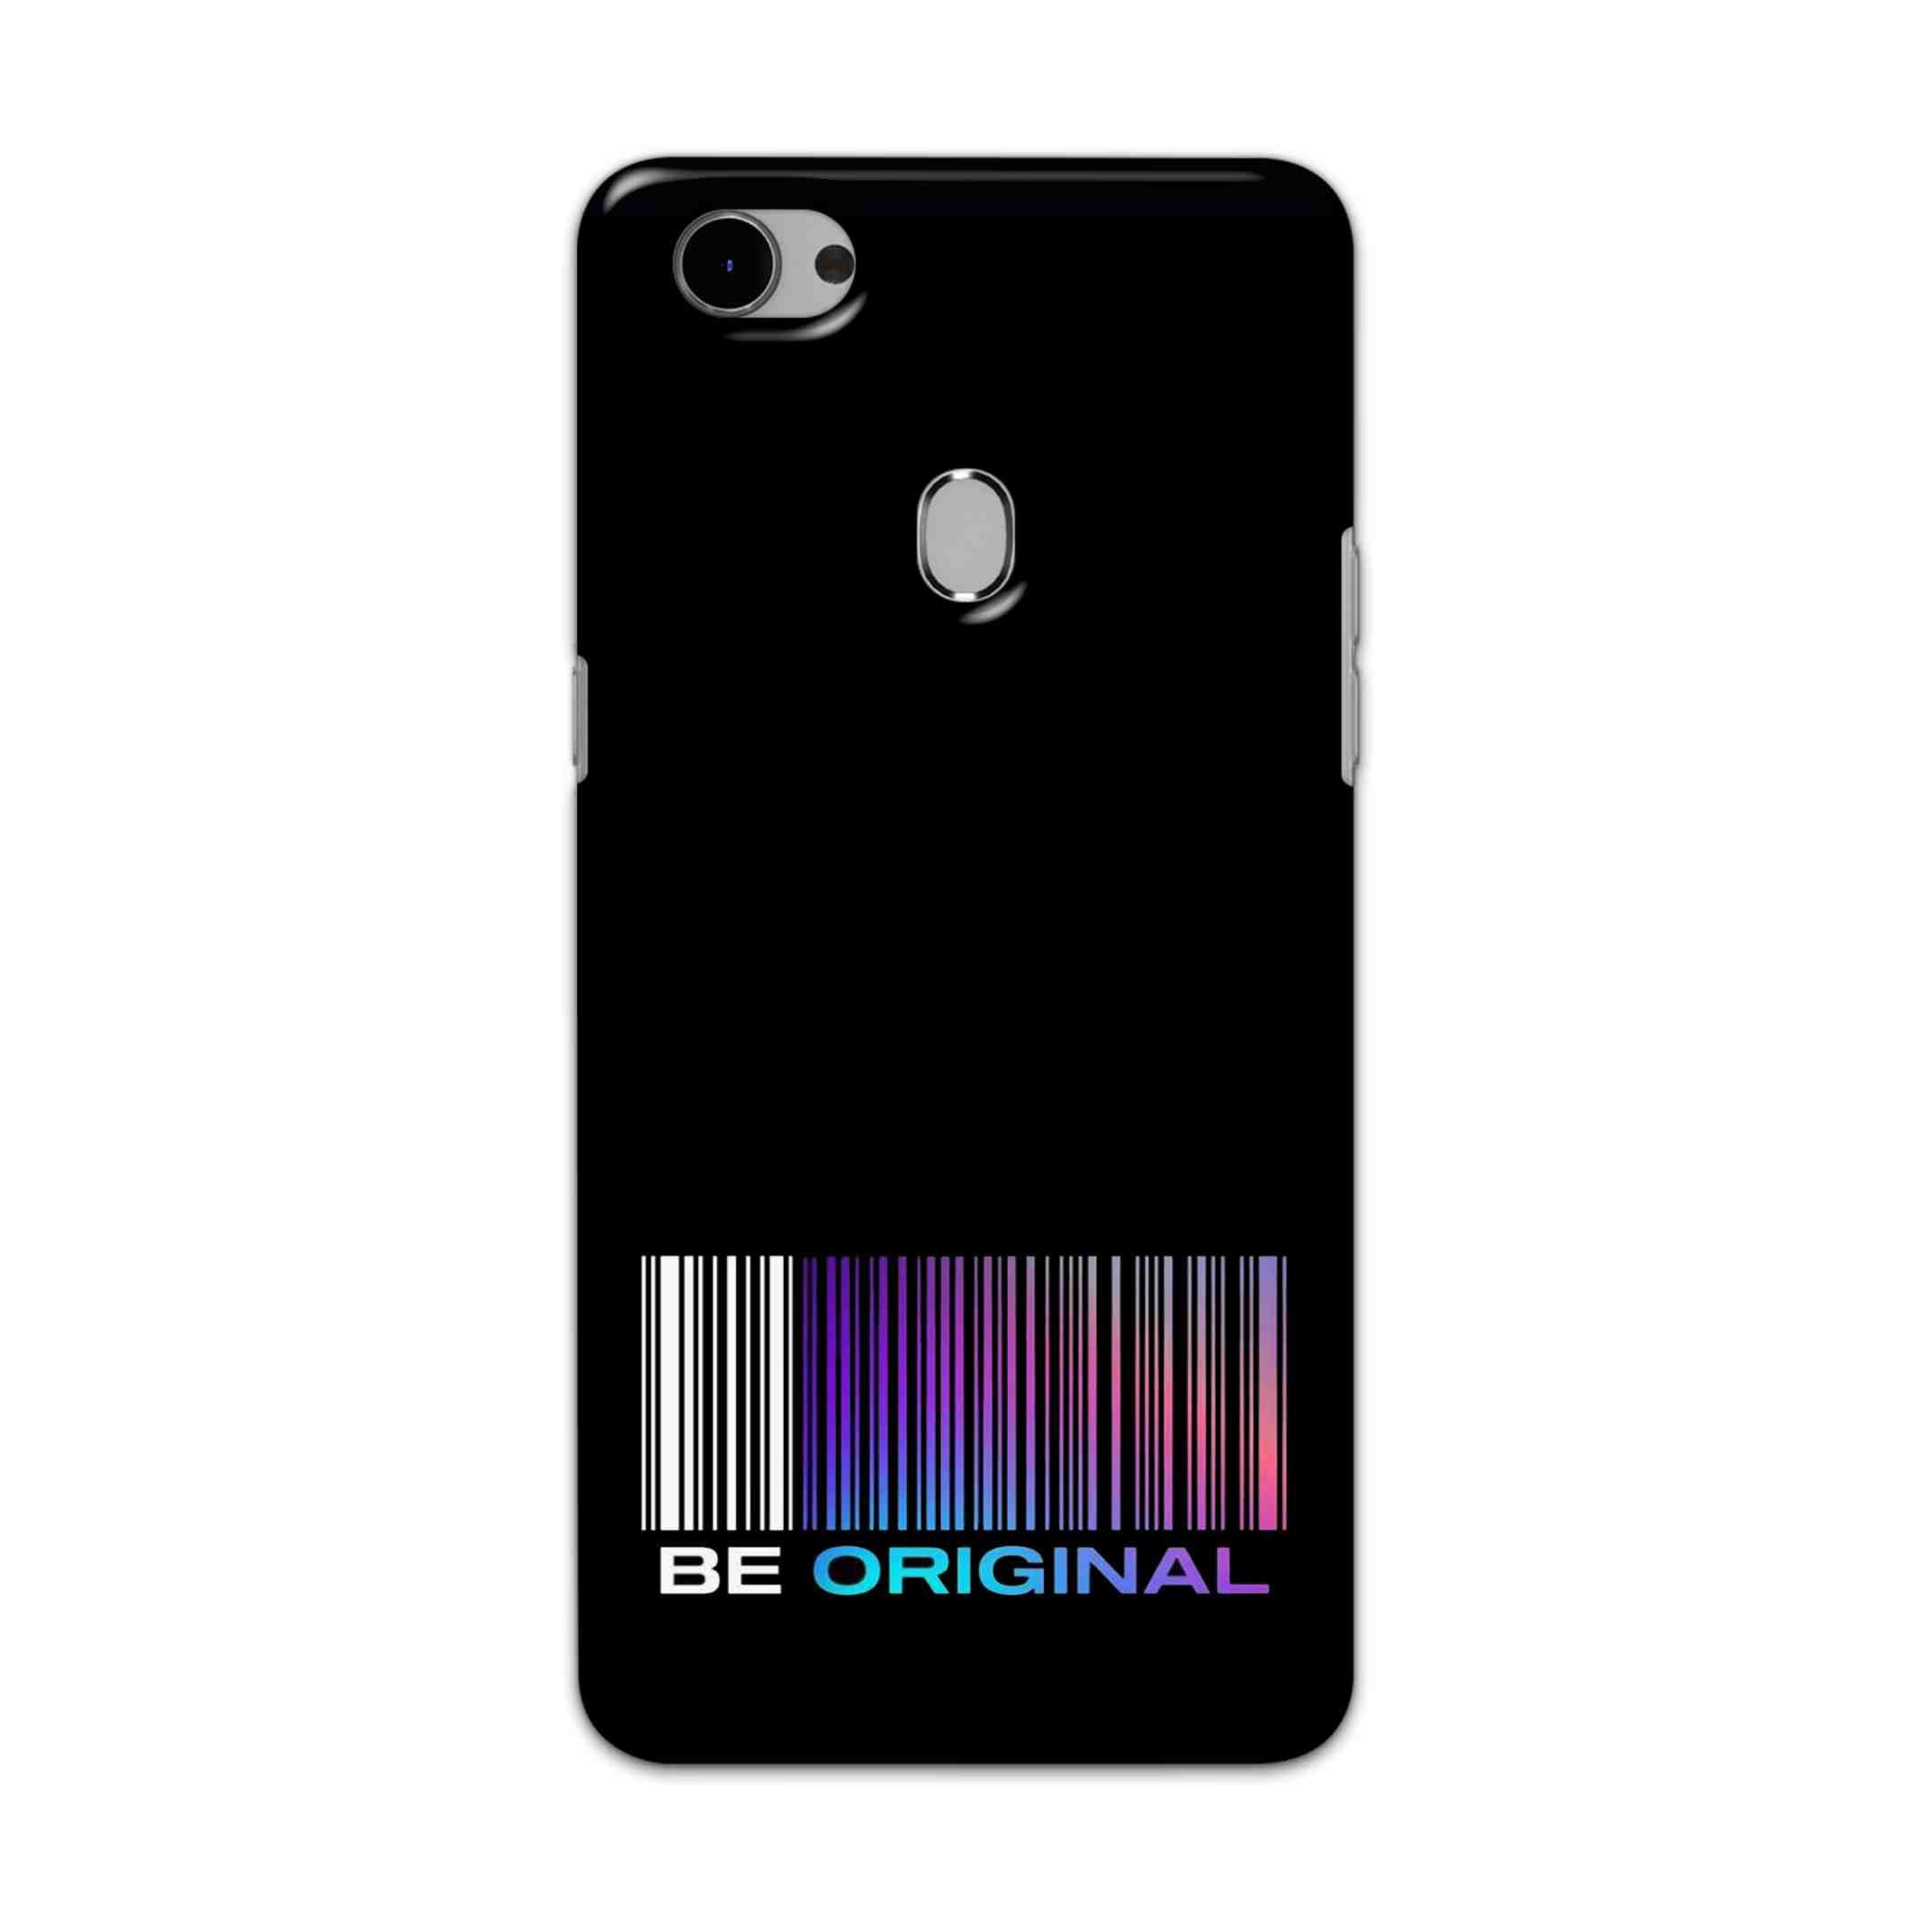 Buy Be Original Hard Back Mobile Phone Case Cover For Oppo F7 Online